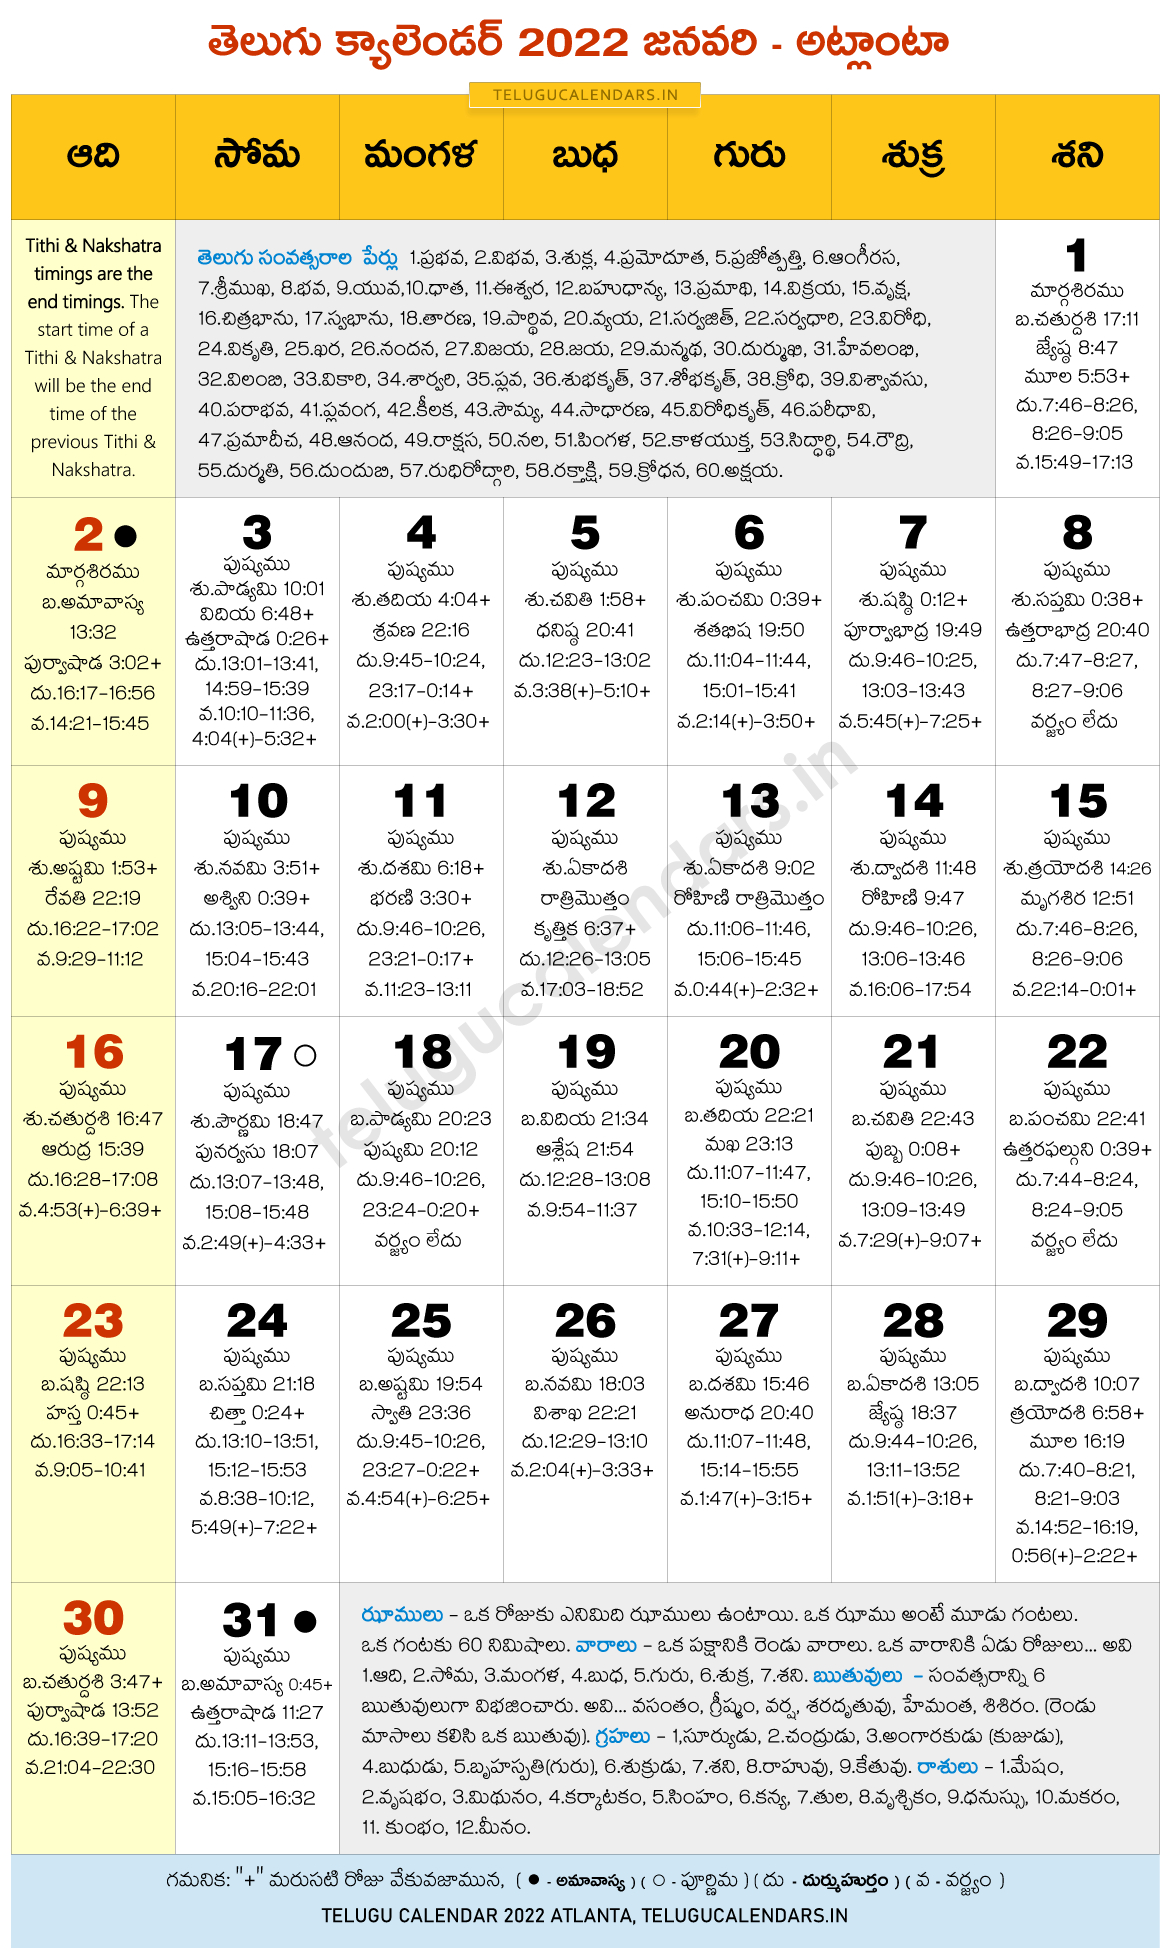 Usa 2022 Telugu Calendar January Archives - 2022 Telugu